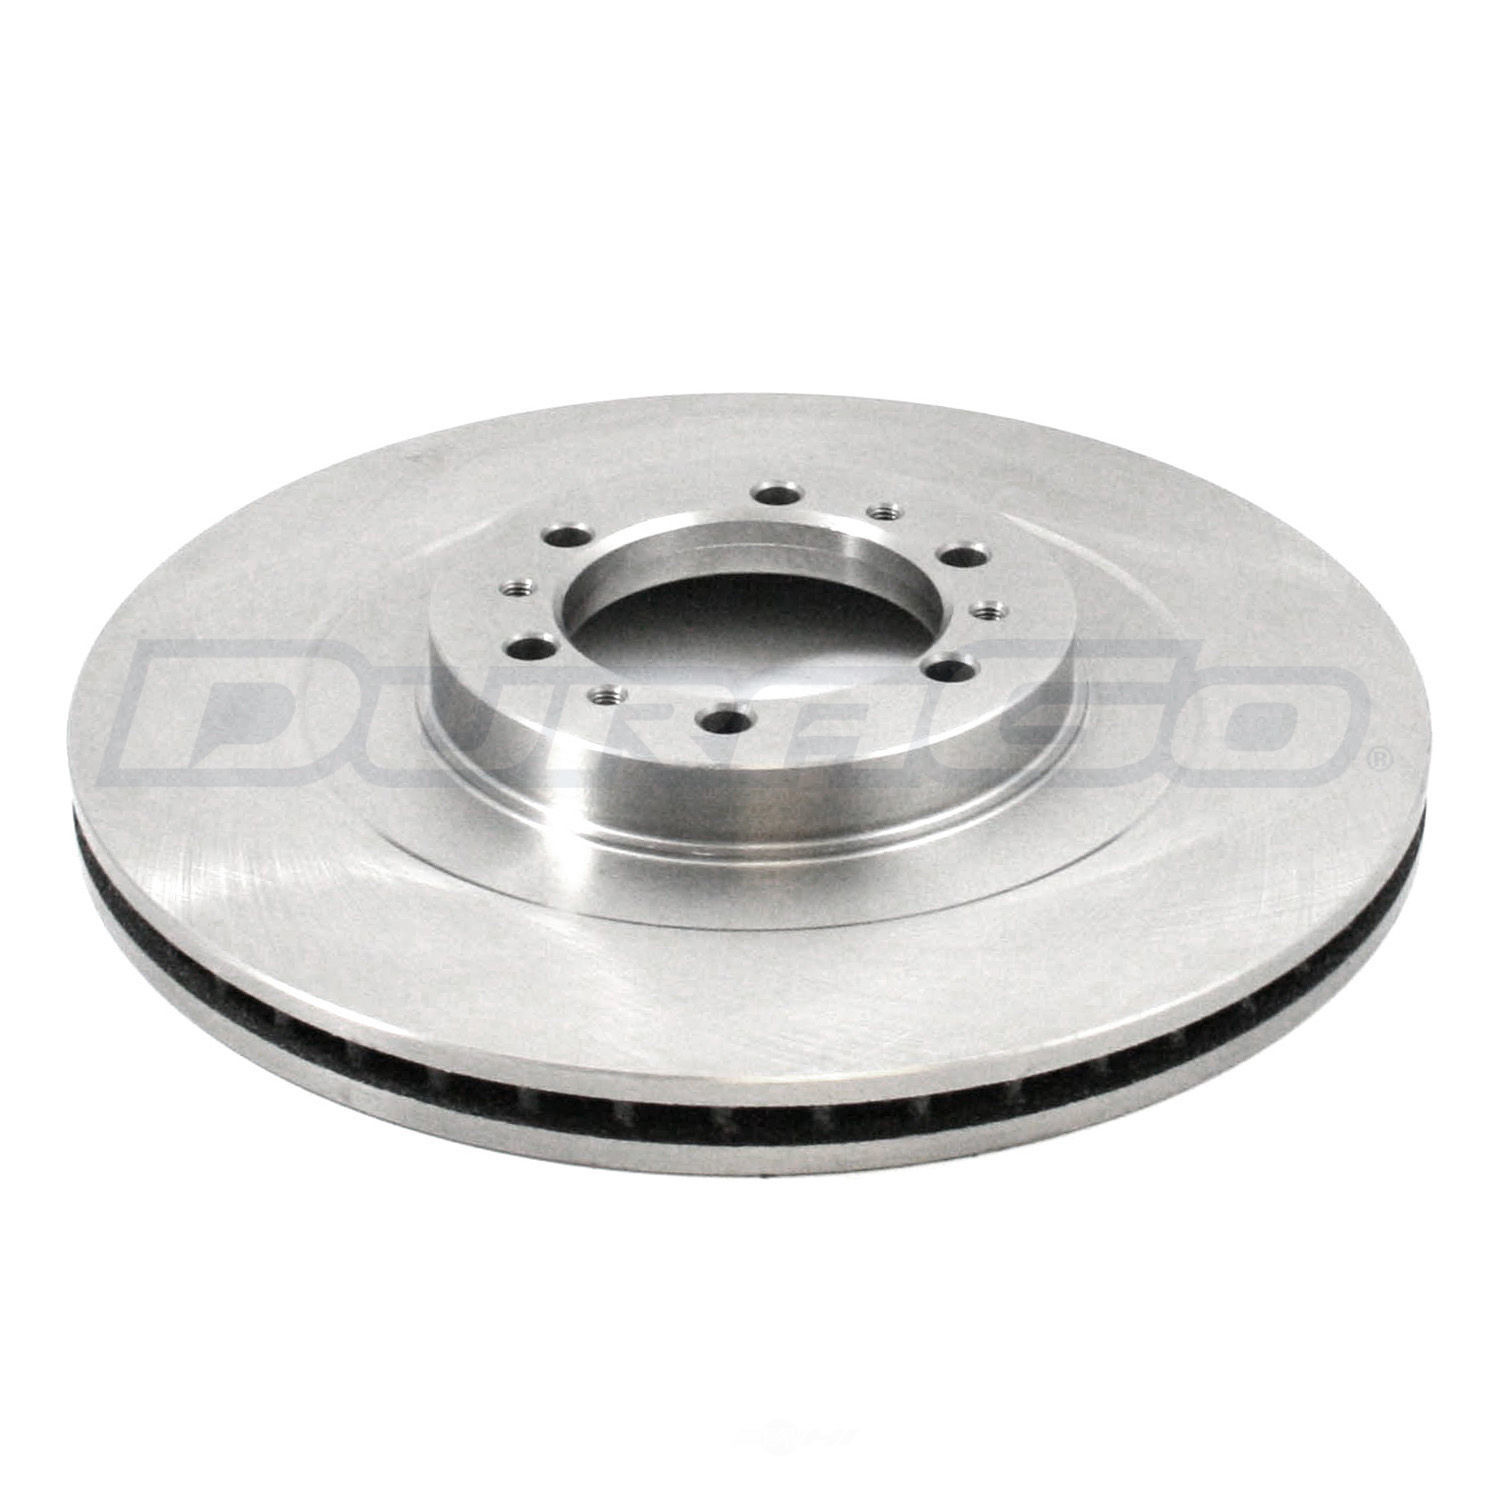 DURAGO - Disc Brake Rotor - D48 BR31291